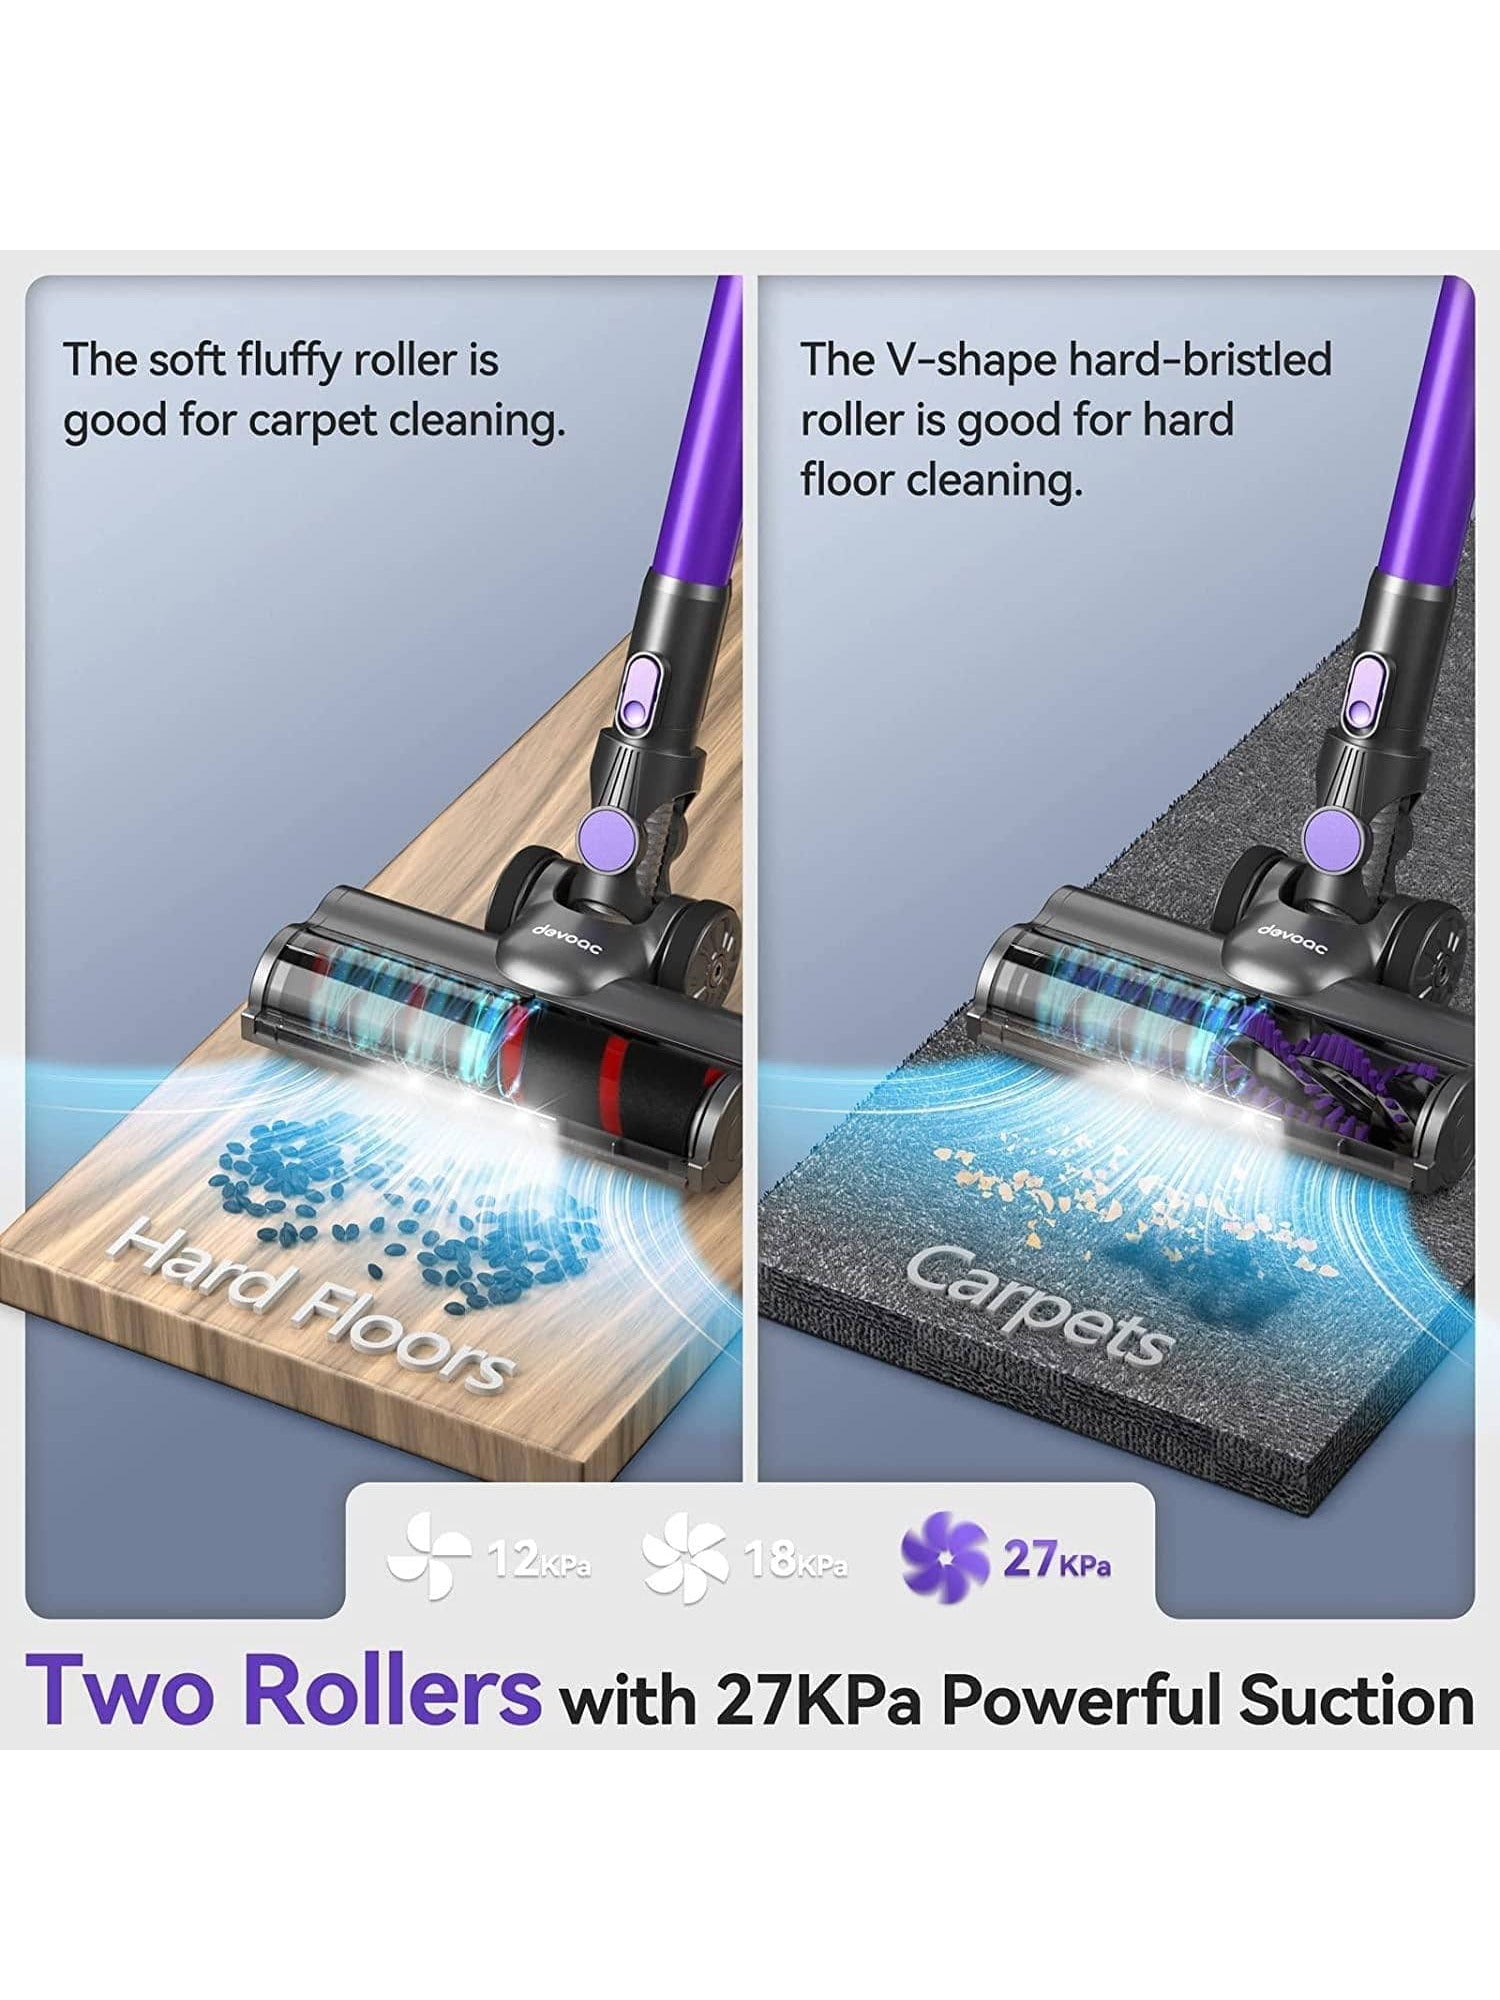 DevoacTech Cordless Vacuum Cleaner, Ultra-Light Quiet Stick Vacuum, 365W Motor 27KPa Powerful Suction, Up to 45mins Runtime, 6 in 1 Handheld Vacuum for Hard Floor Carpet Pet Hair